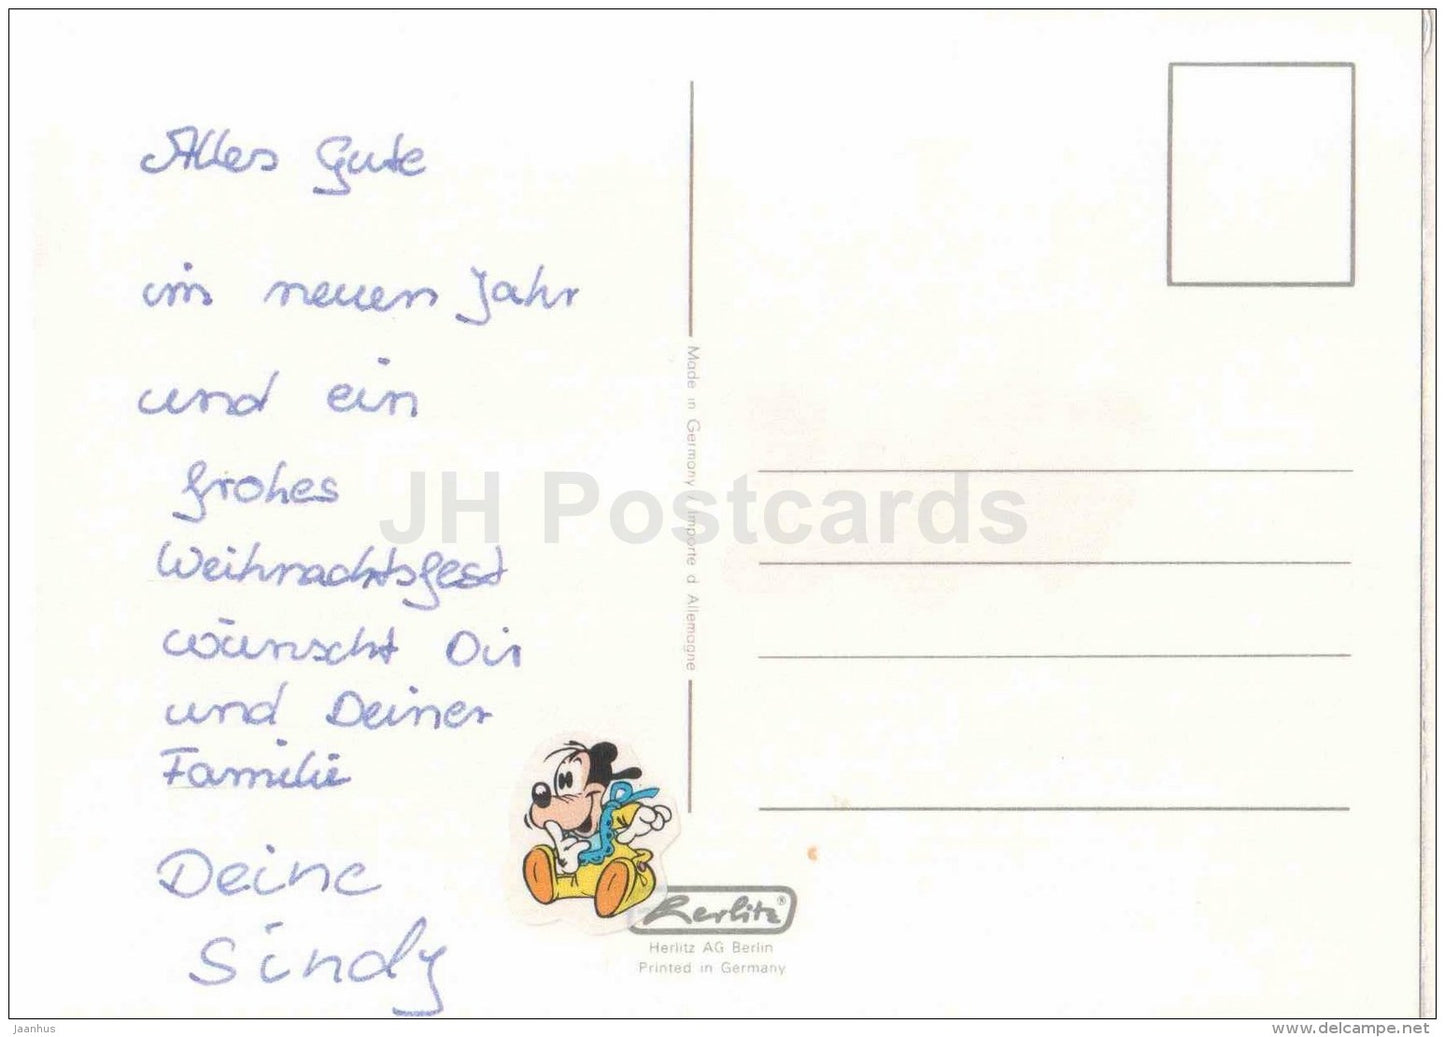 Christmas Greeting Card - illustration - Santa Claus - gifts - apples - teddy bear - socks - Germany - used - JH Postcards